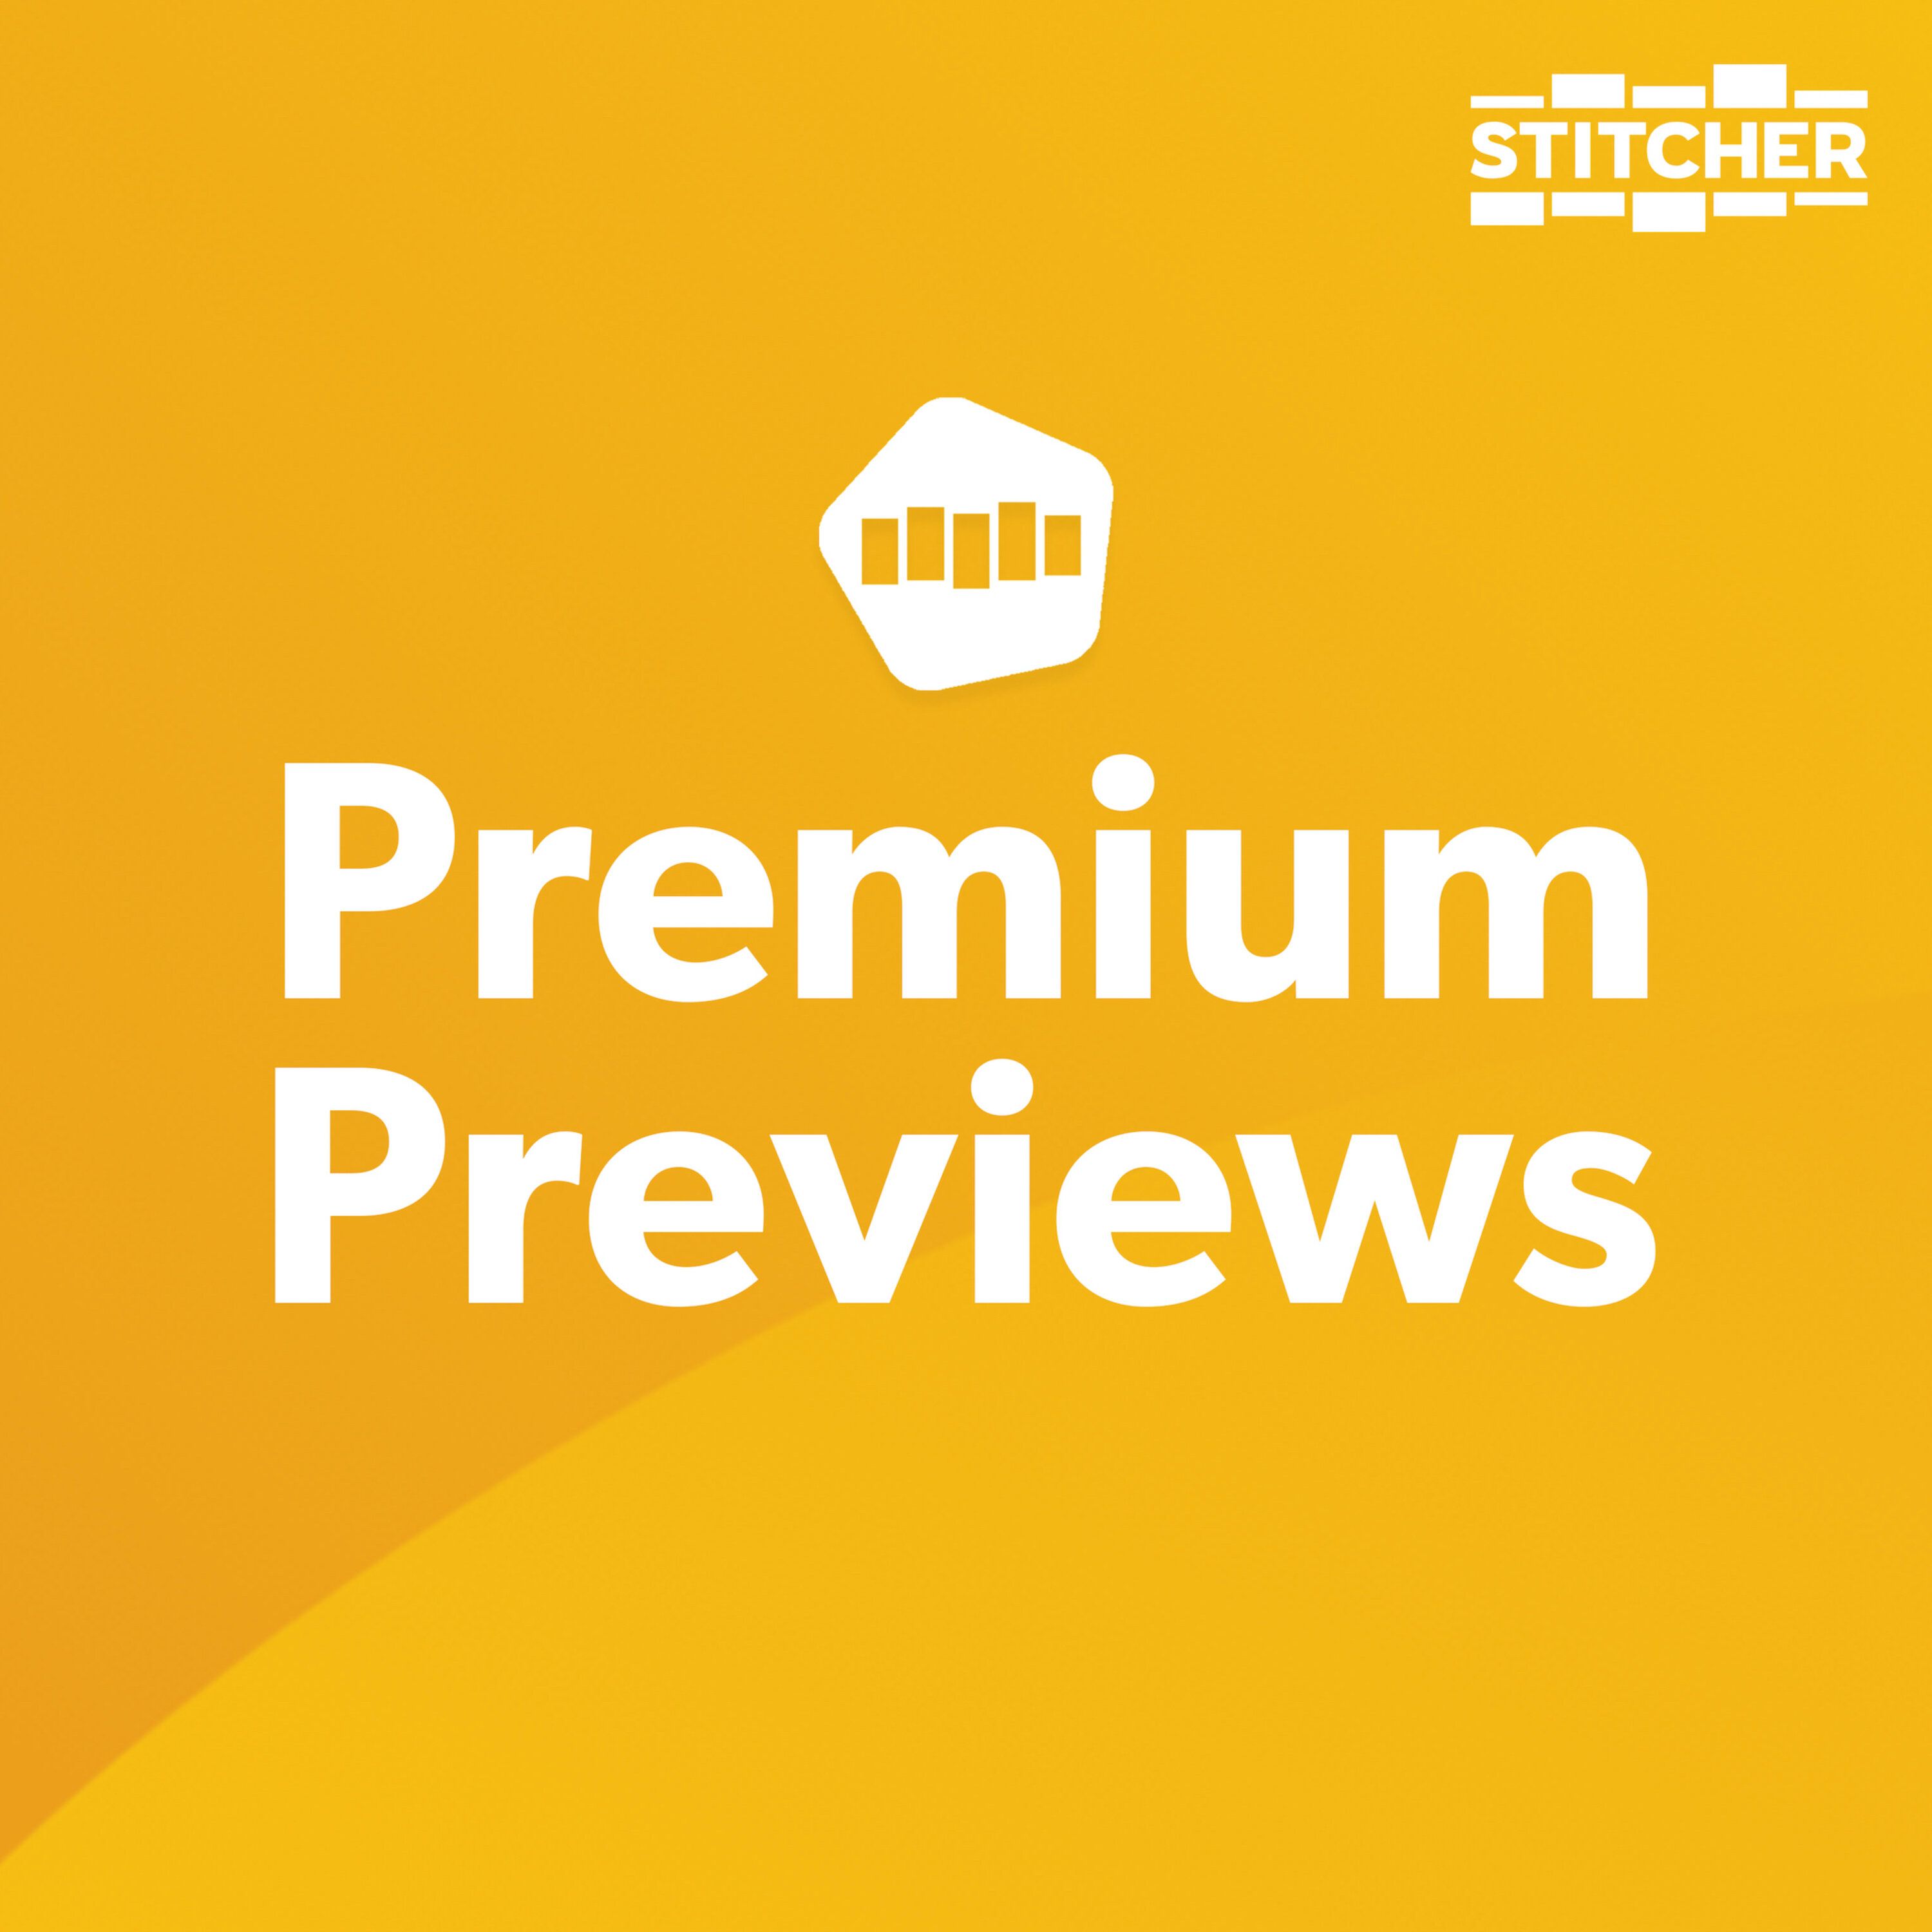 Stitcher Premium Previews